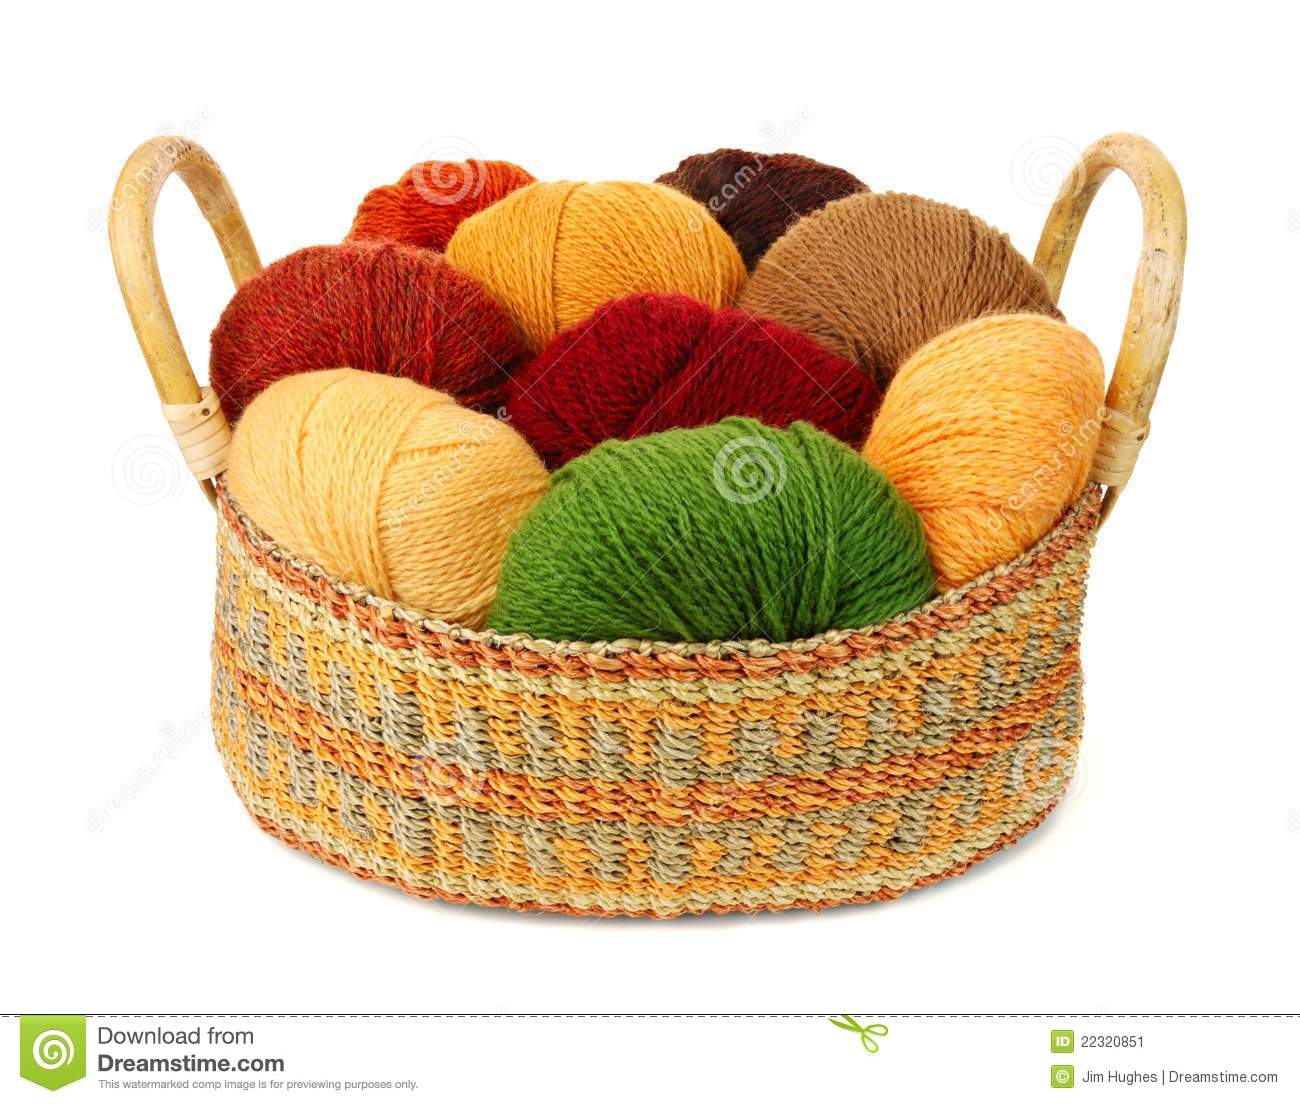 Basket Of Wool Yarn Stock Image   Image  22320851